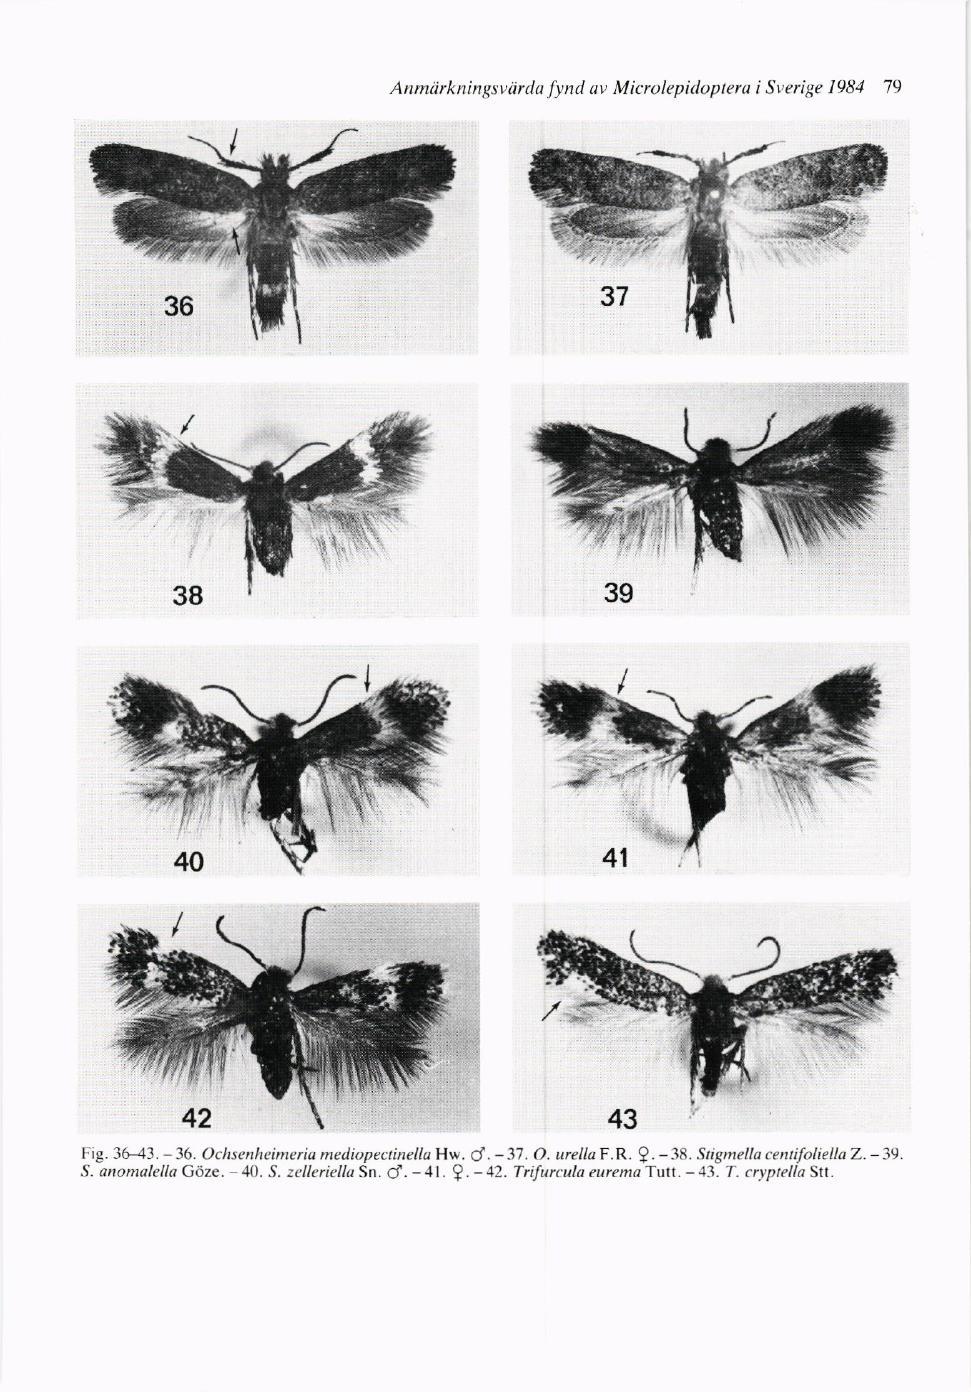 Atmtirkningsv'iirdu Jynd ut, M icrolepidopteru i Sverige 1984 79 Fig. 36-{3. - 36. Ochsc,nheincriu nrcdiopectinella Hw. d. - -37. (). urella F.R.